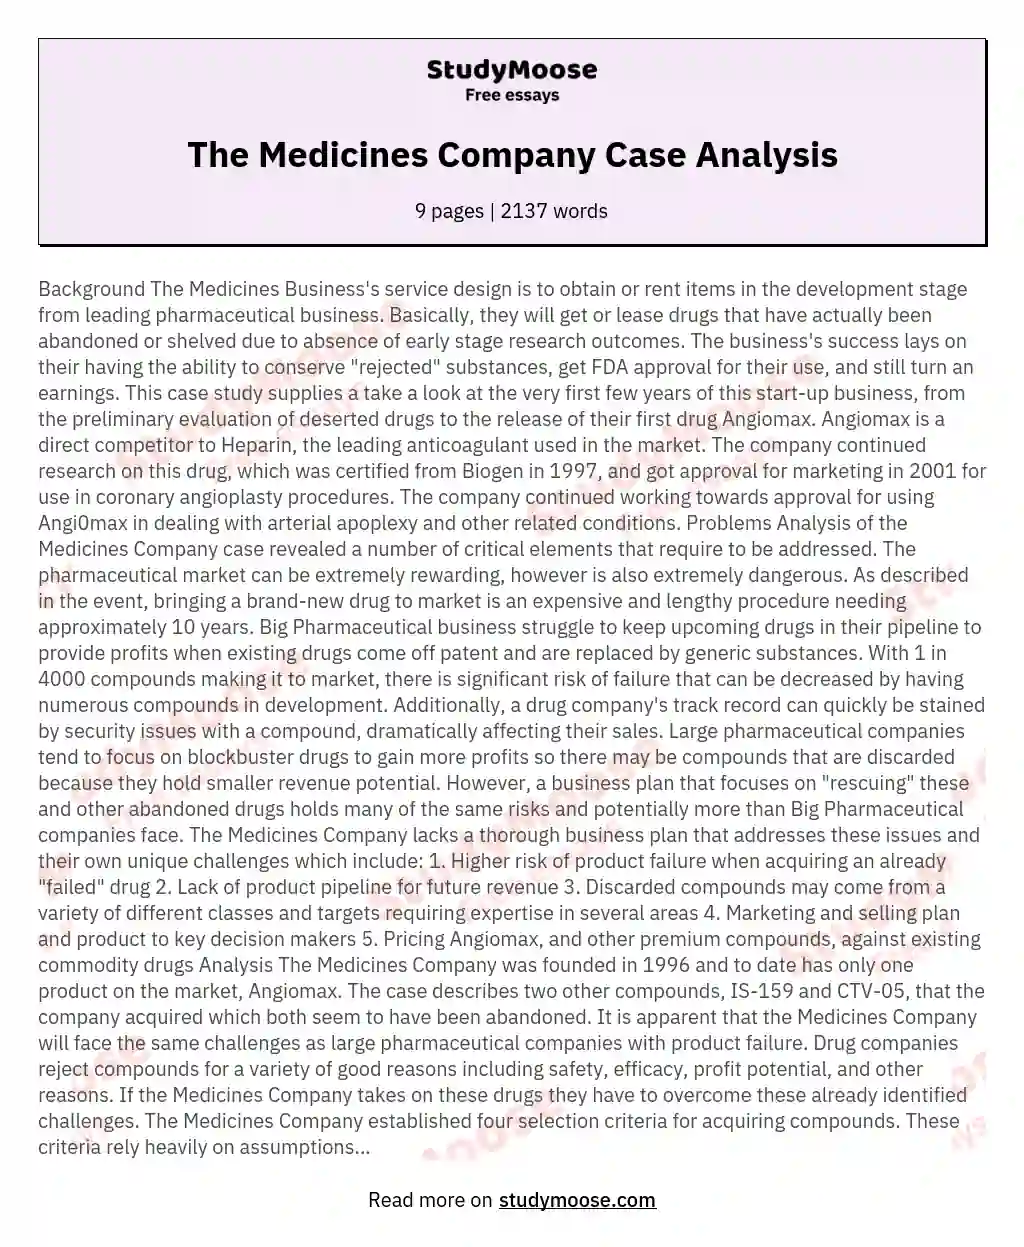 The Medicines Company Case Analysis essay